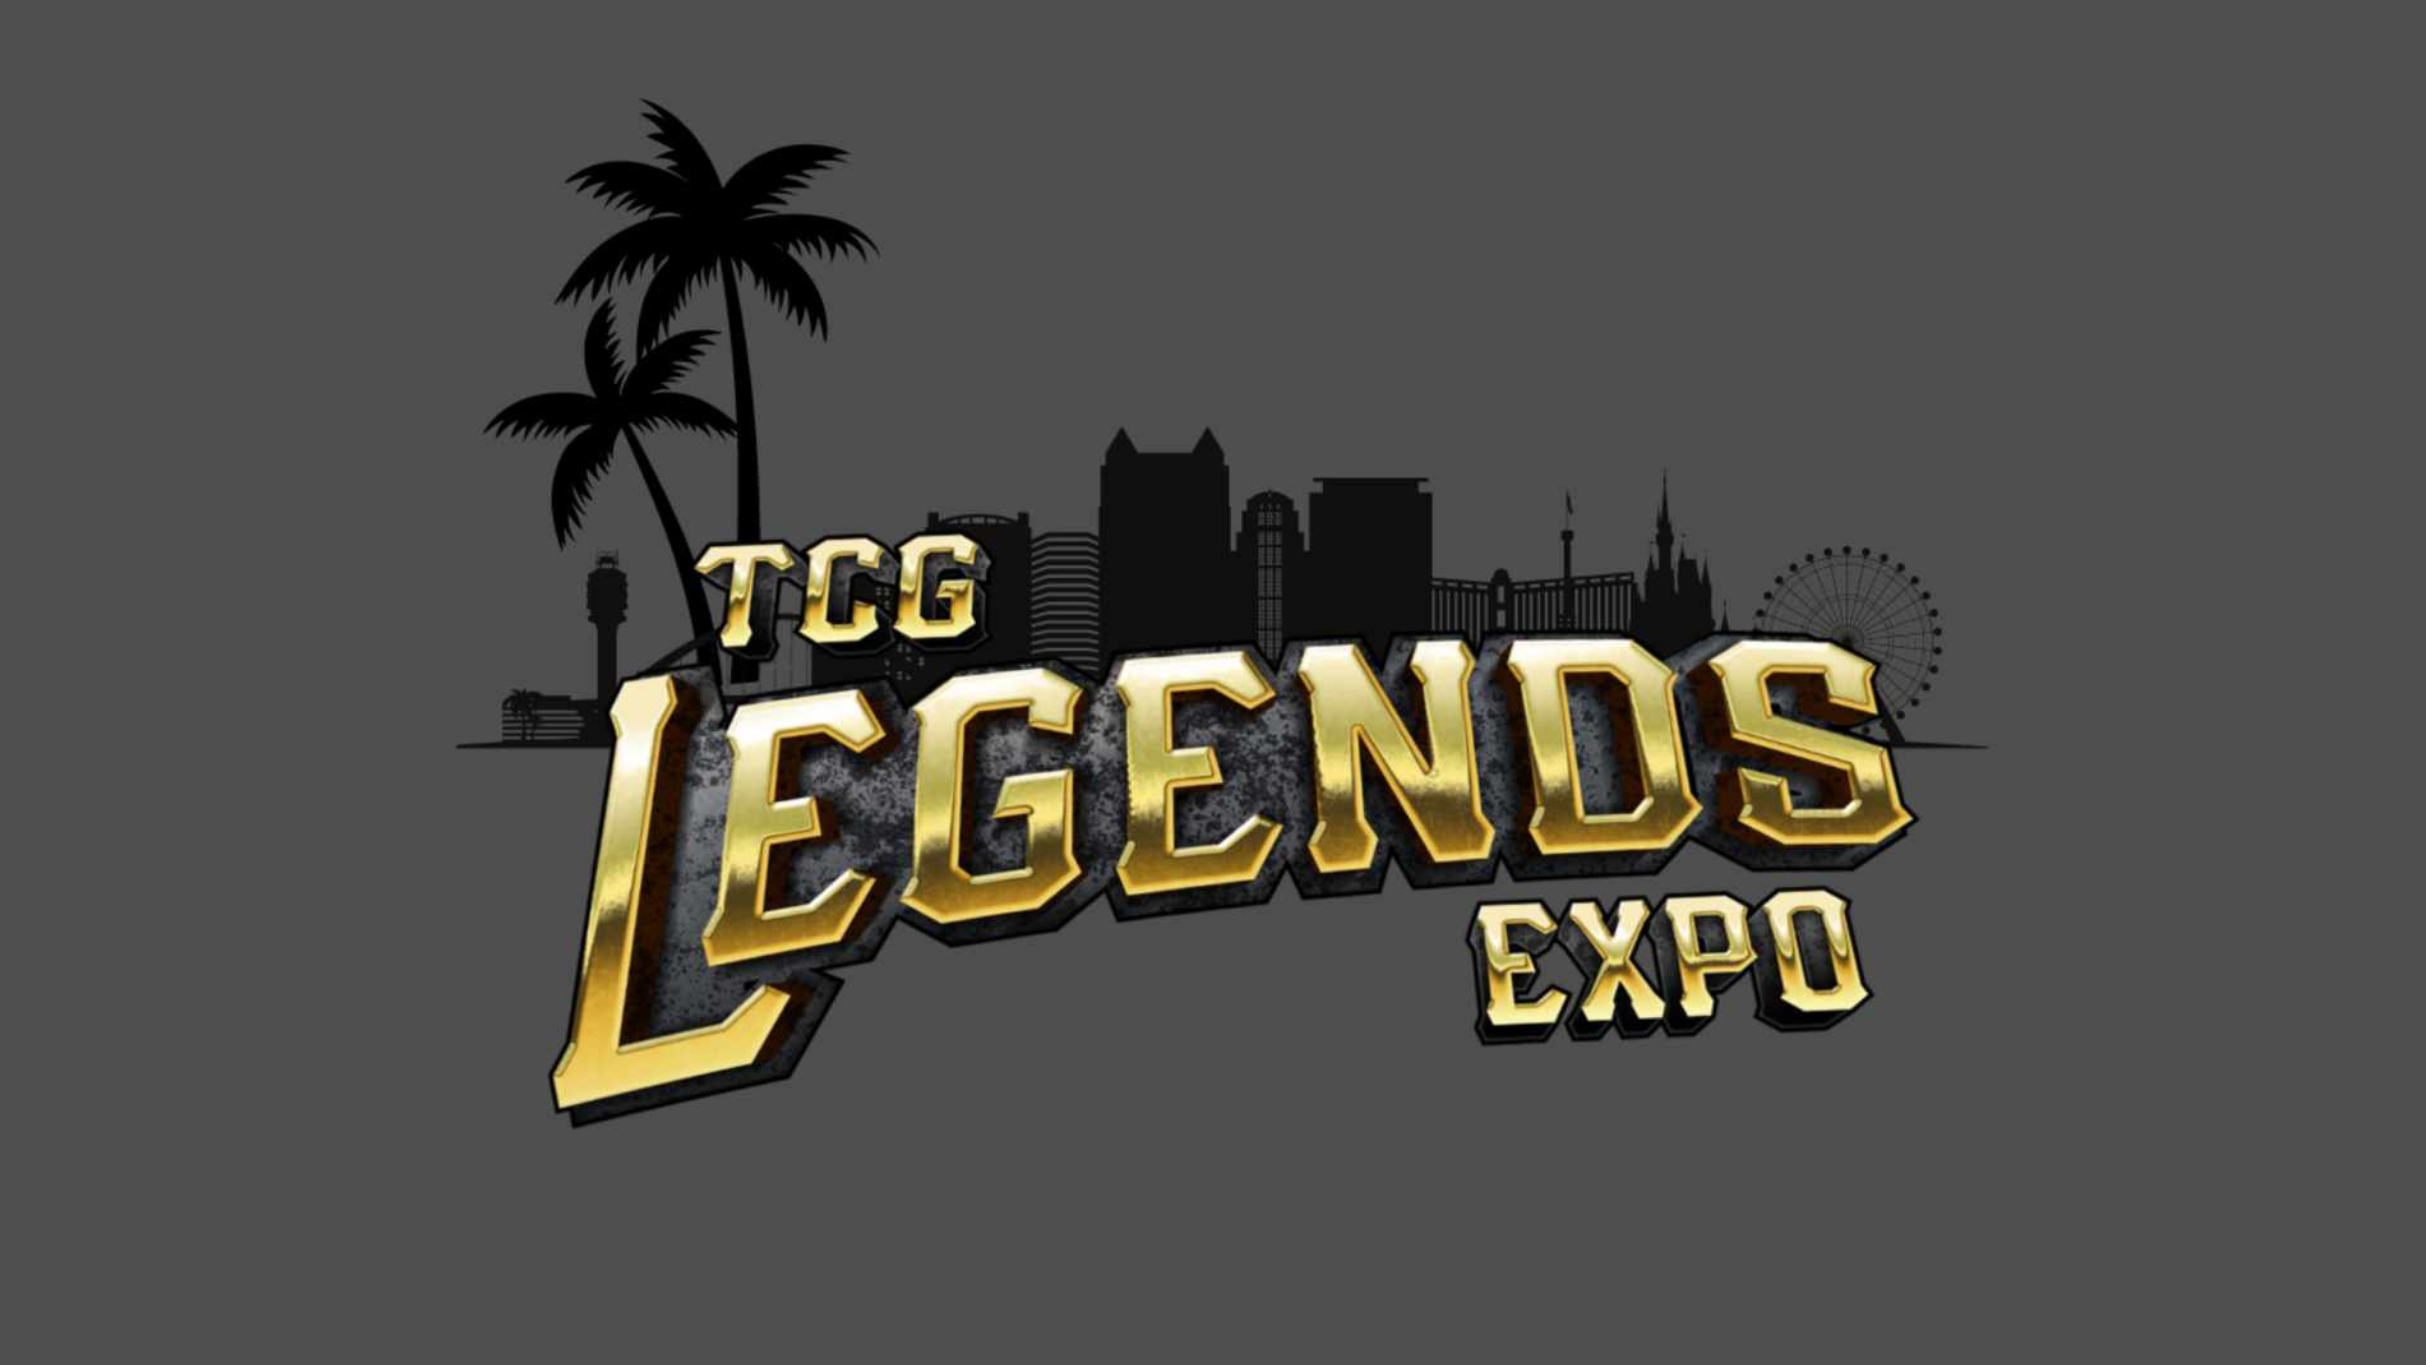 TCG Legends Expo